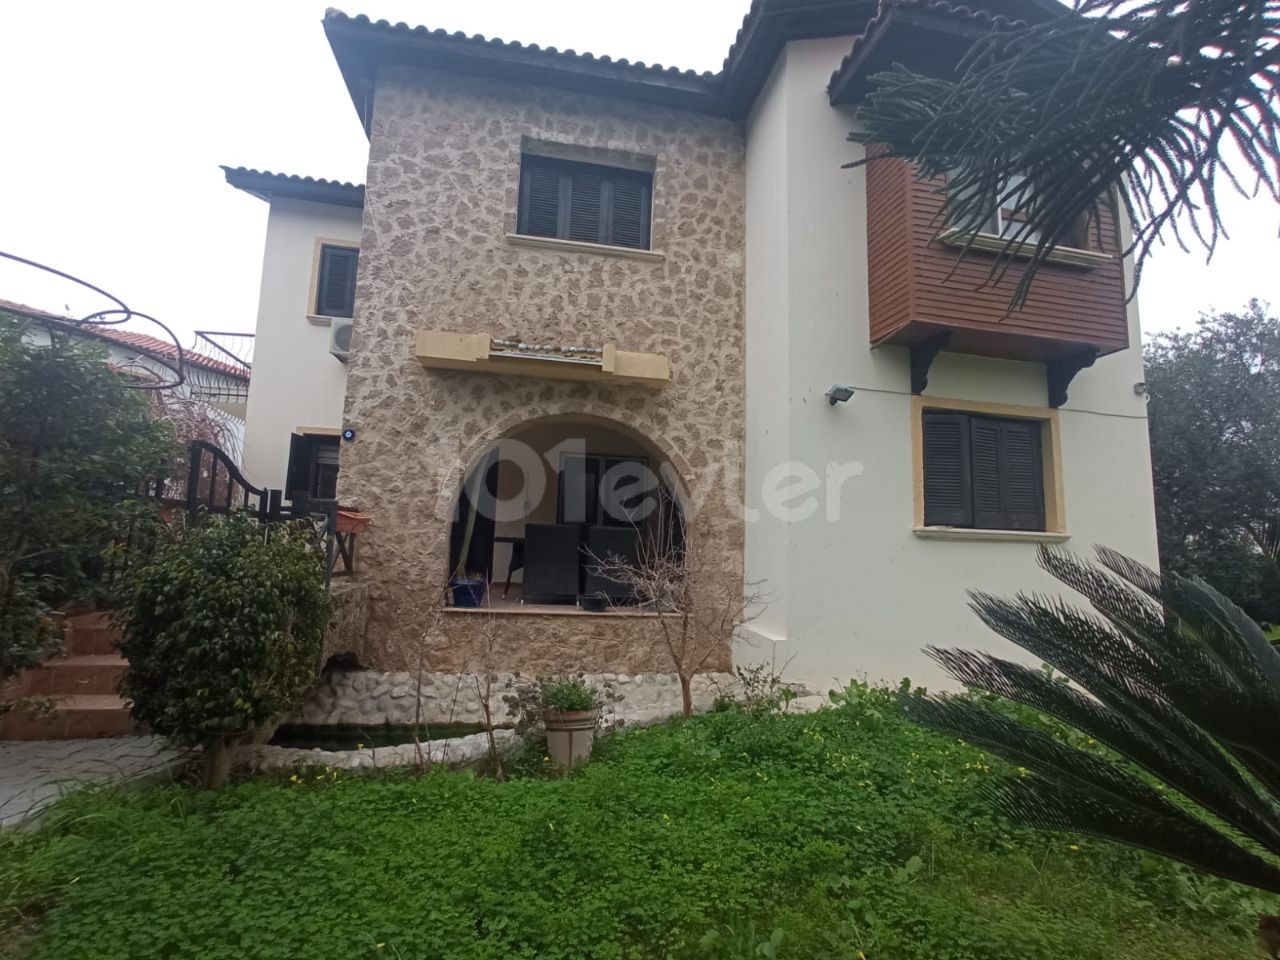 3+1 Villa zur Miete mit monatlicher Zahlung in Kyrenia Ozanköy